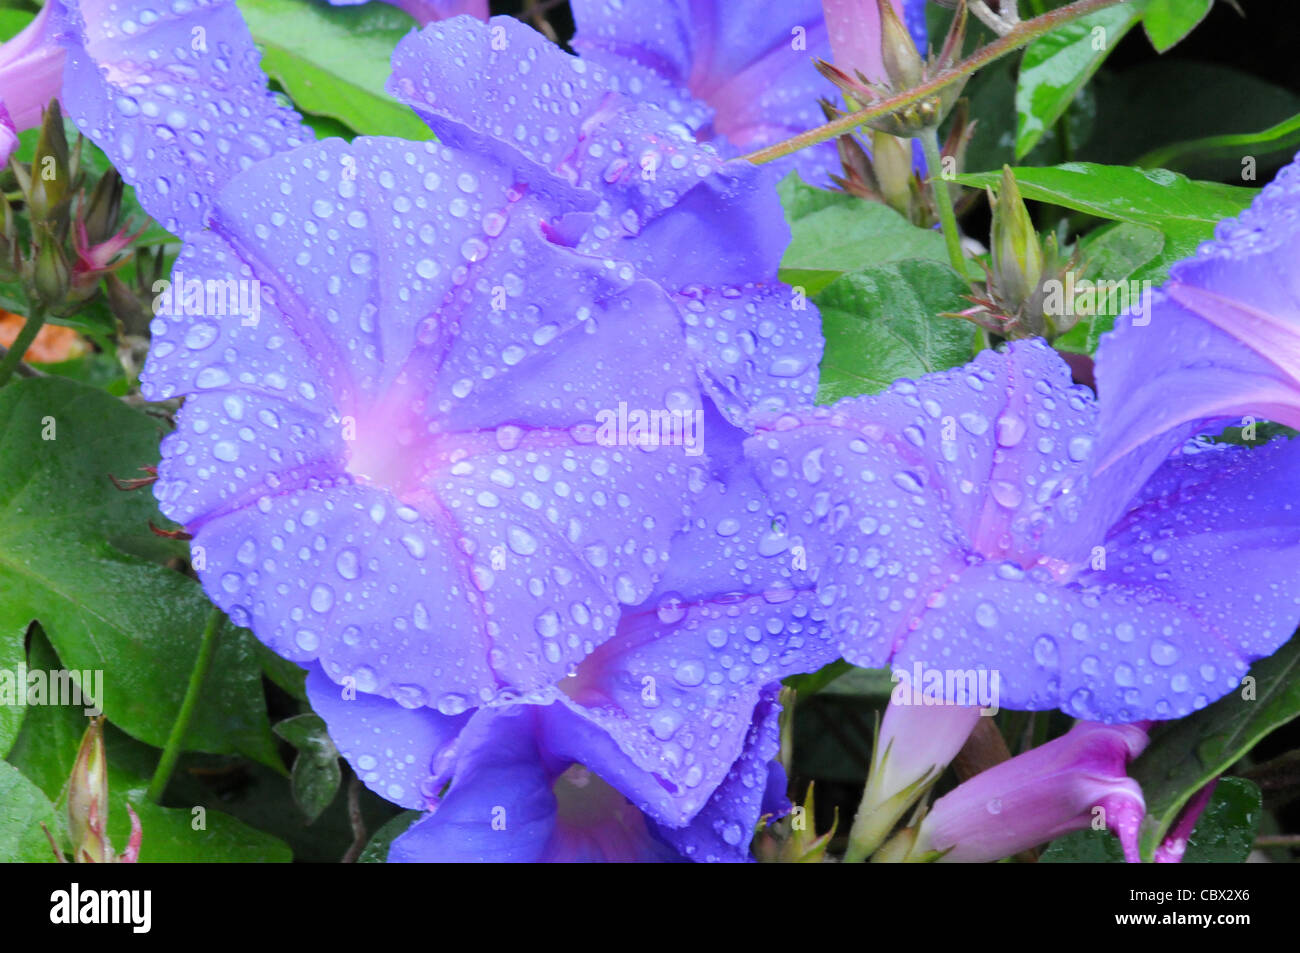 Morning Glory flores después de la lluvia fina, Ipomoea purpurea Foto de stock